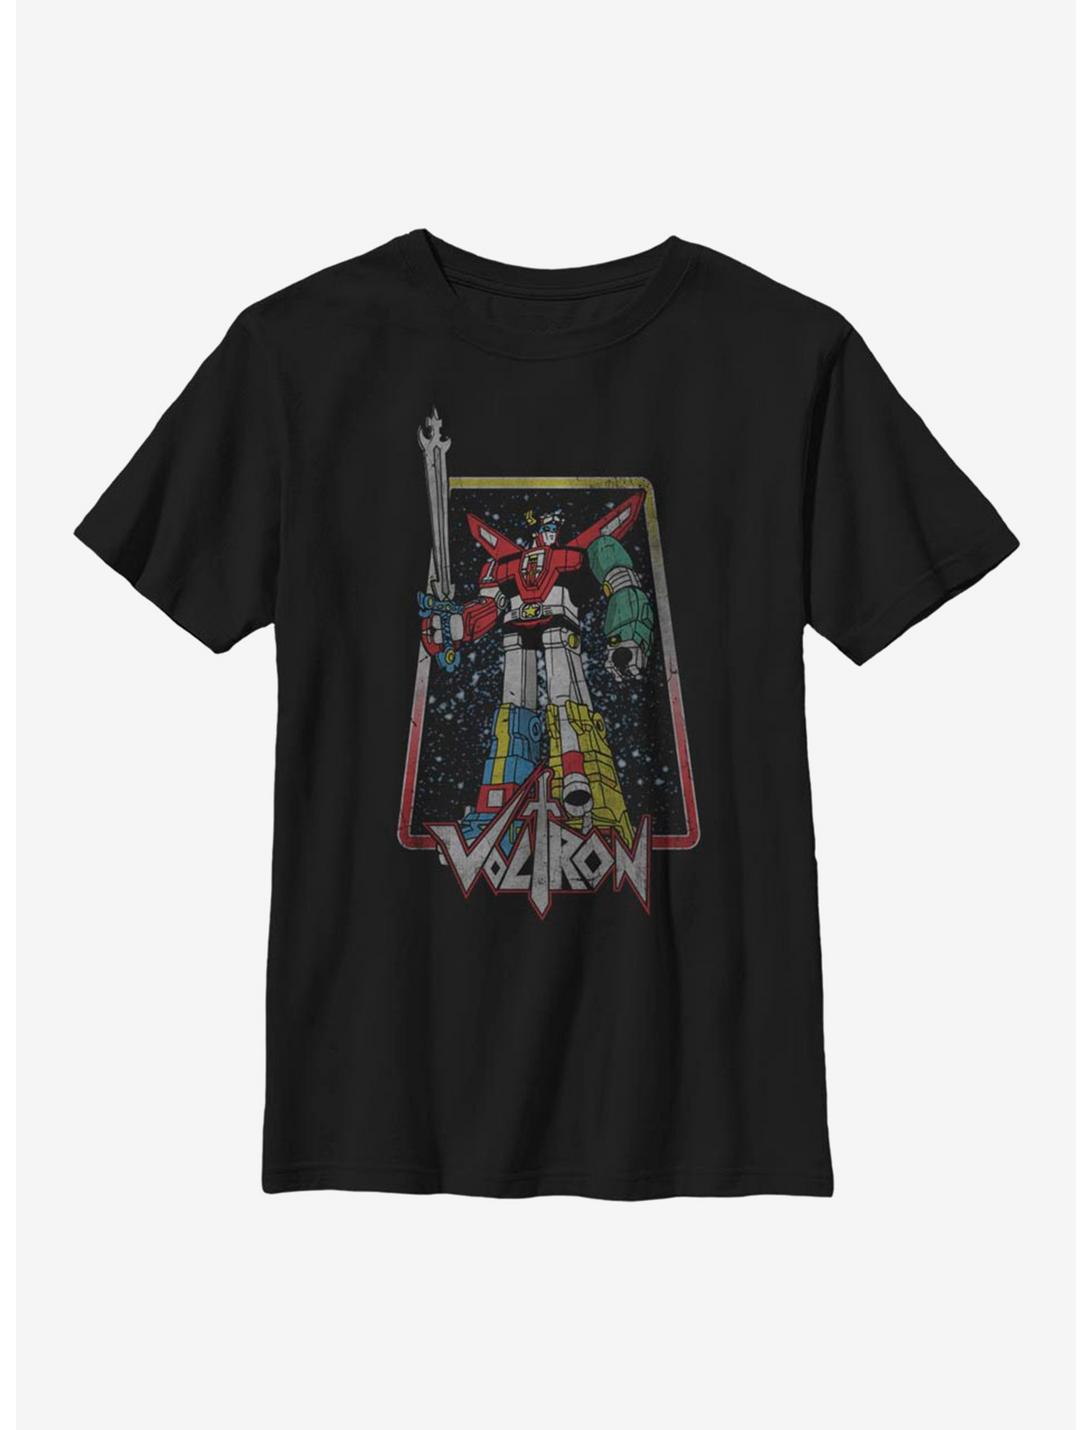 Voltron: Legendary Defender Classic Youth T-Shirt, BLACK, hi-res